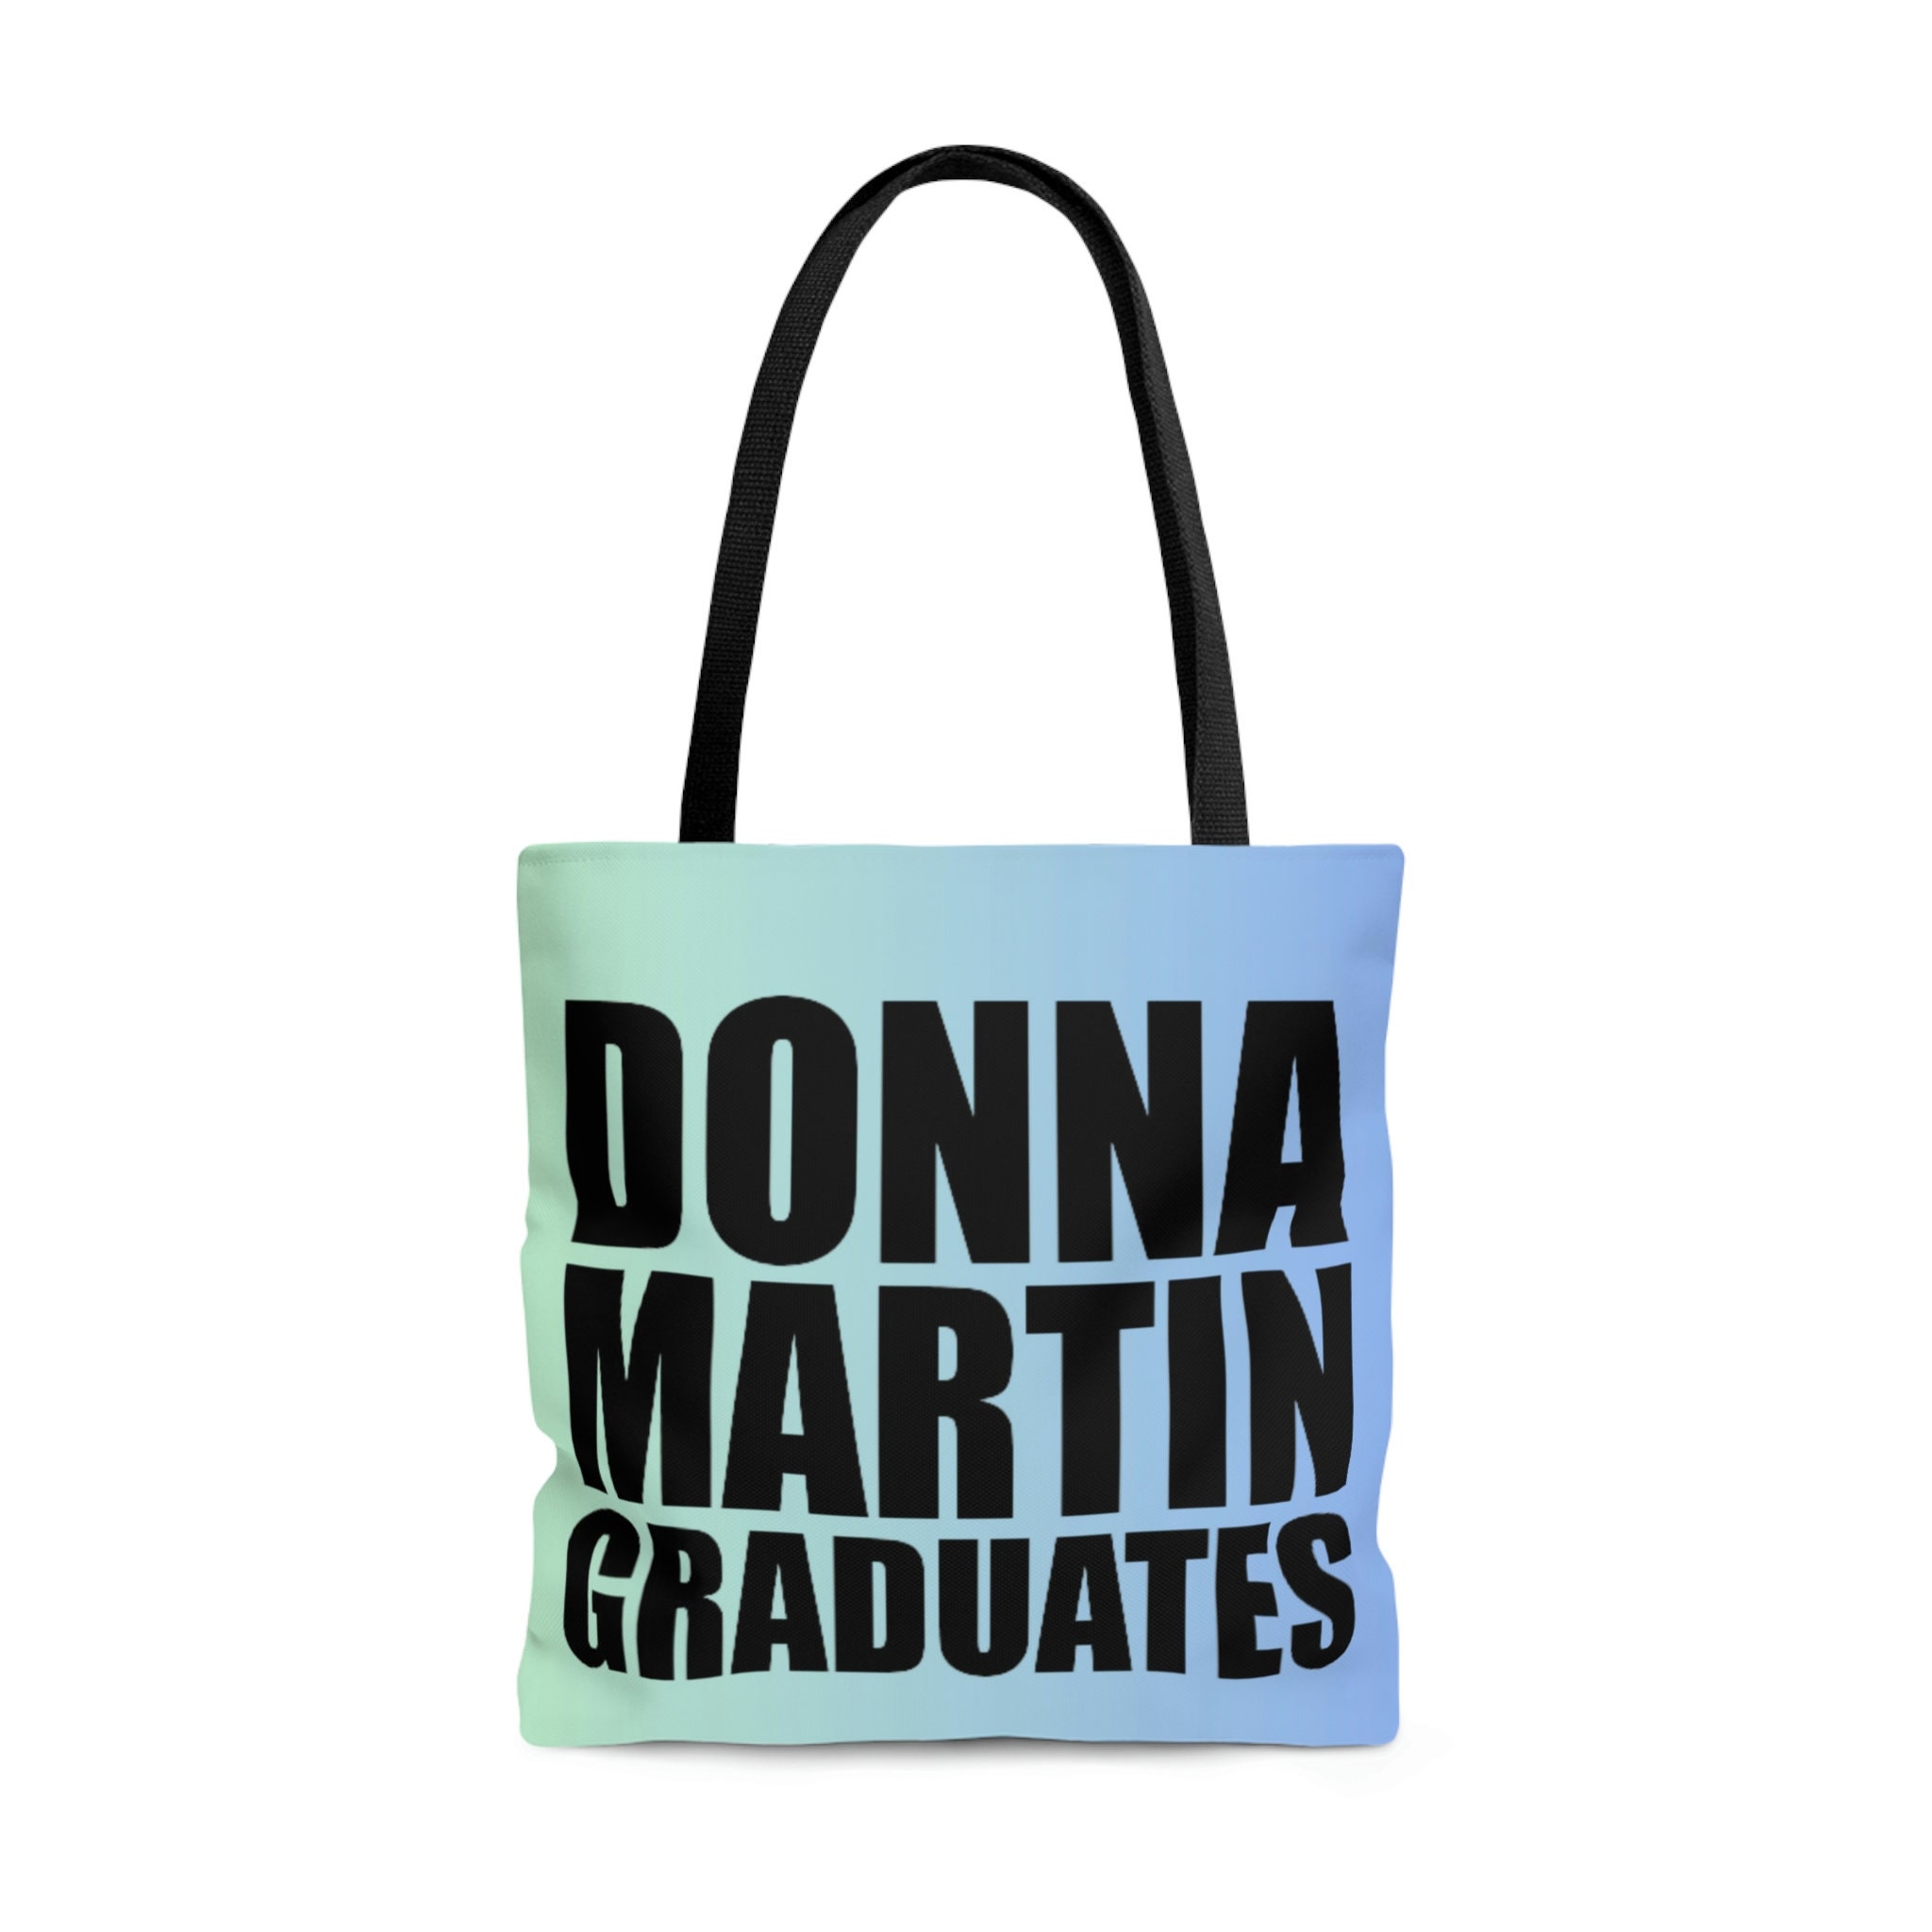 Donna Martin Graduates Tote Bag, Beverly Hills 90210, Tori Spelling 